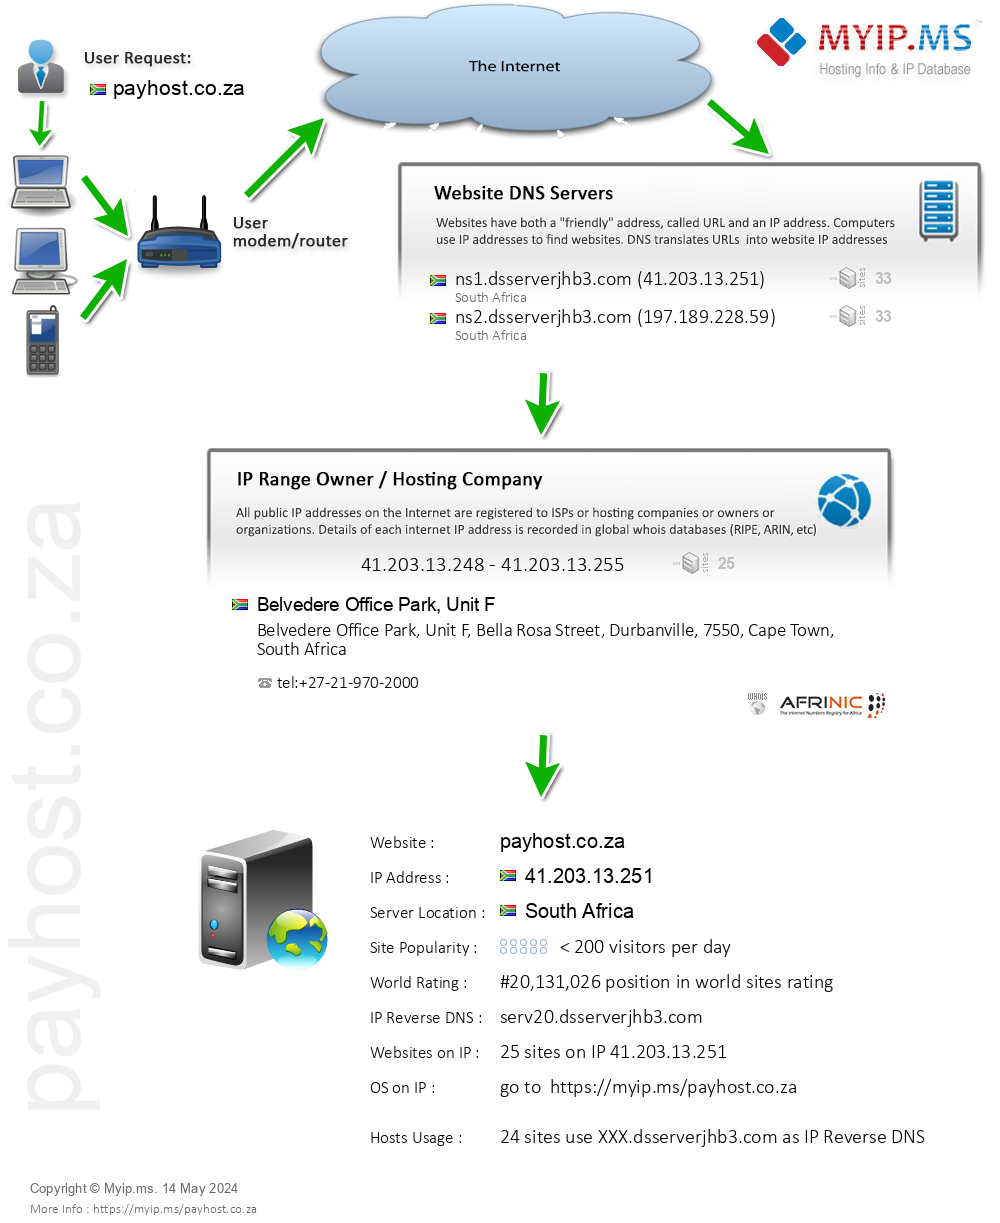 Payhost.co.za - Website Hosting Visual IP Diagram